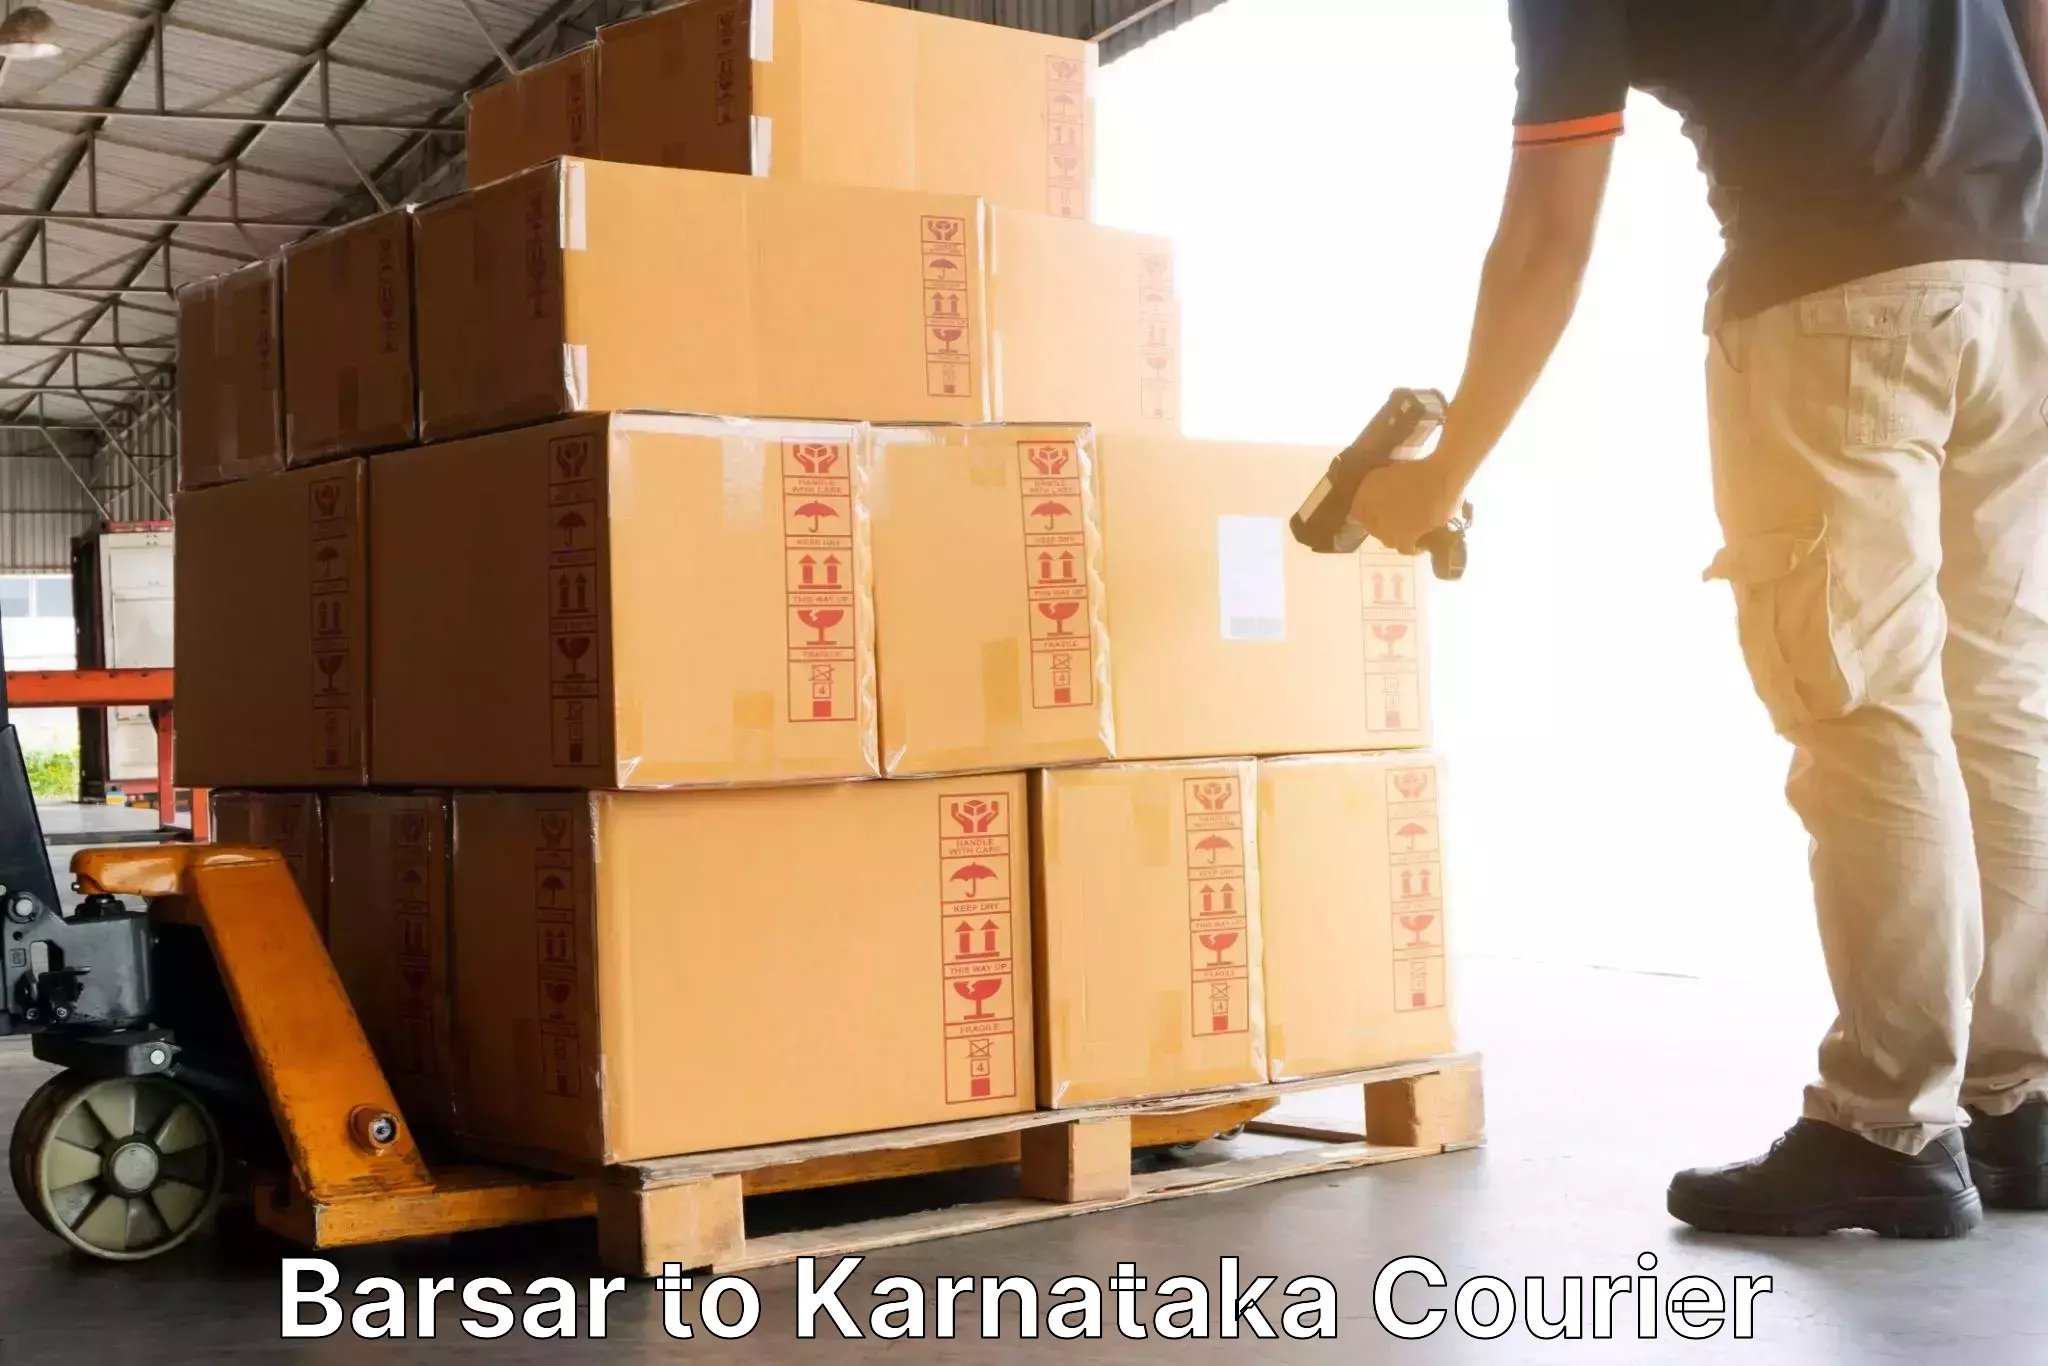 Courier service comparison Barsar to Banavara